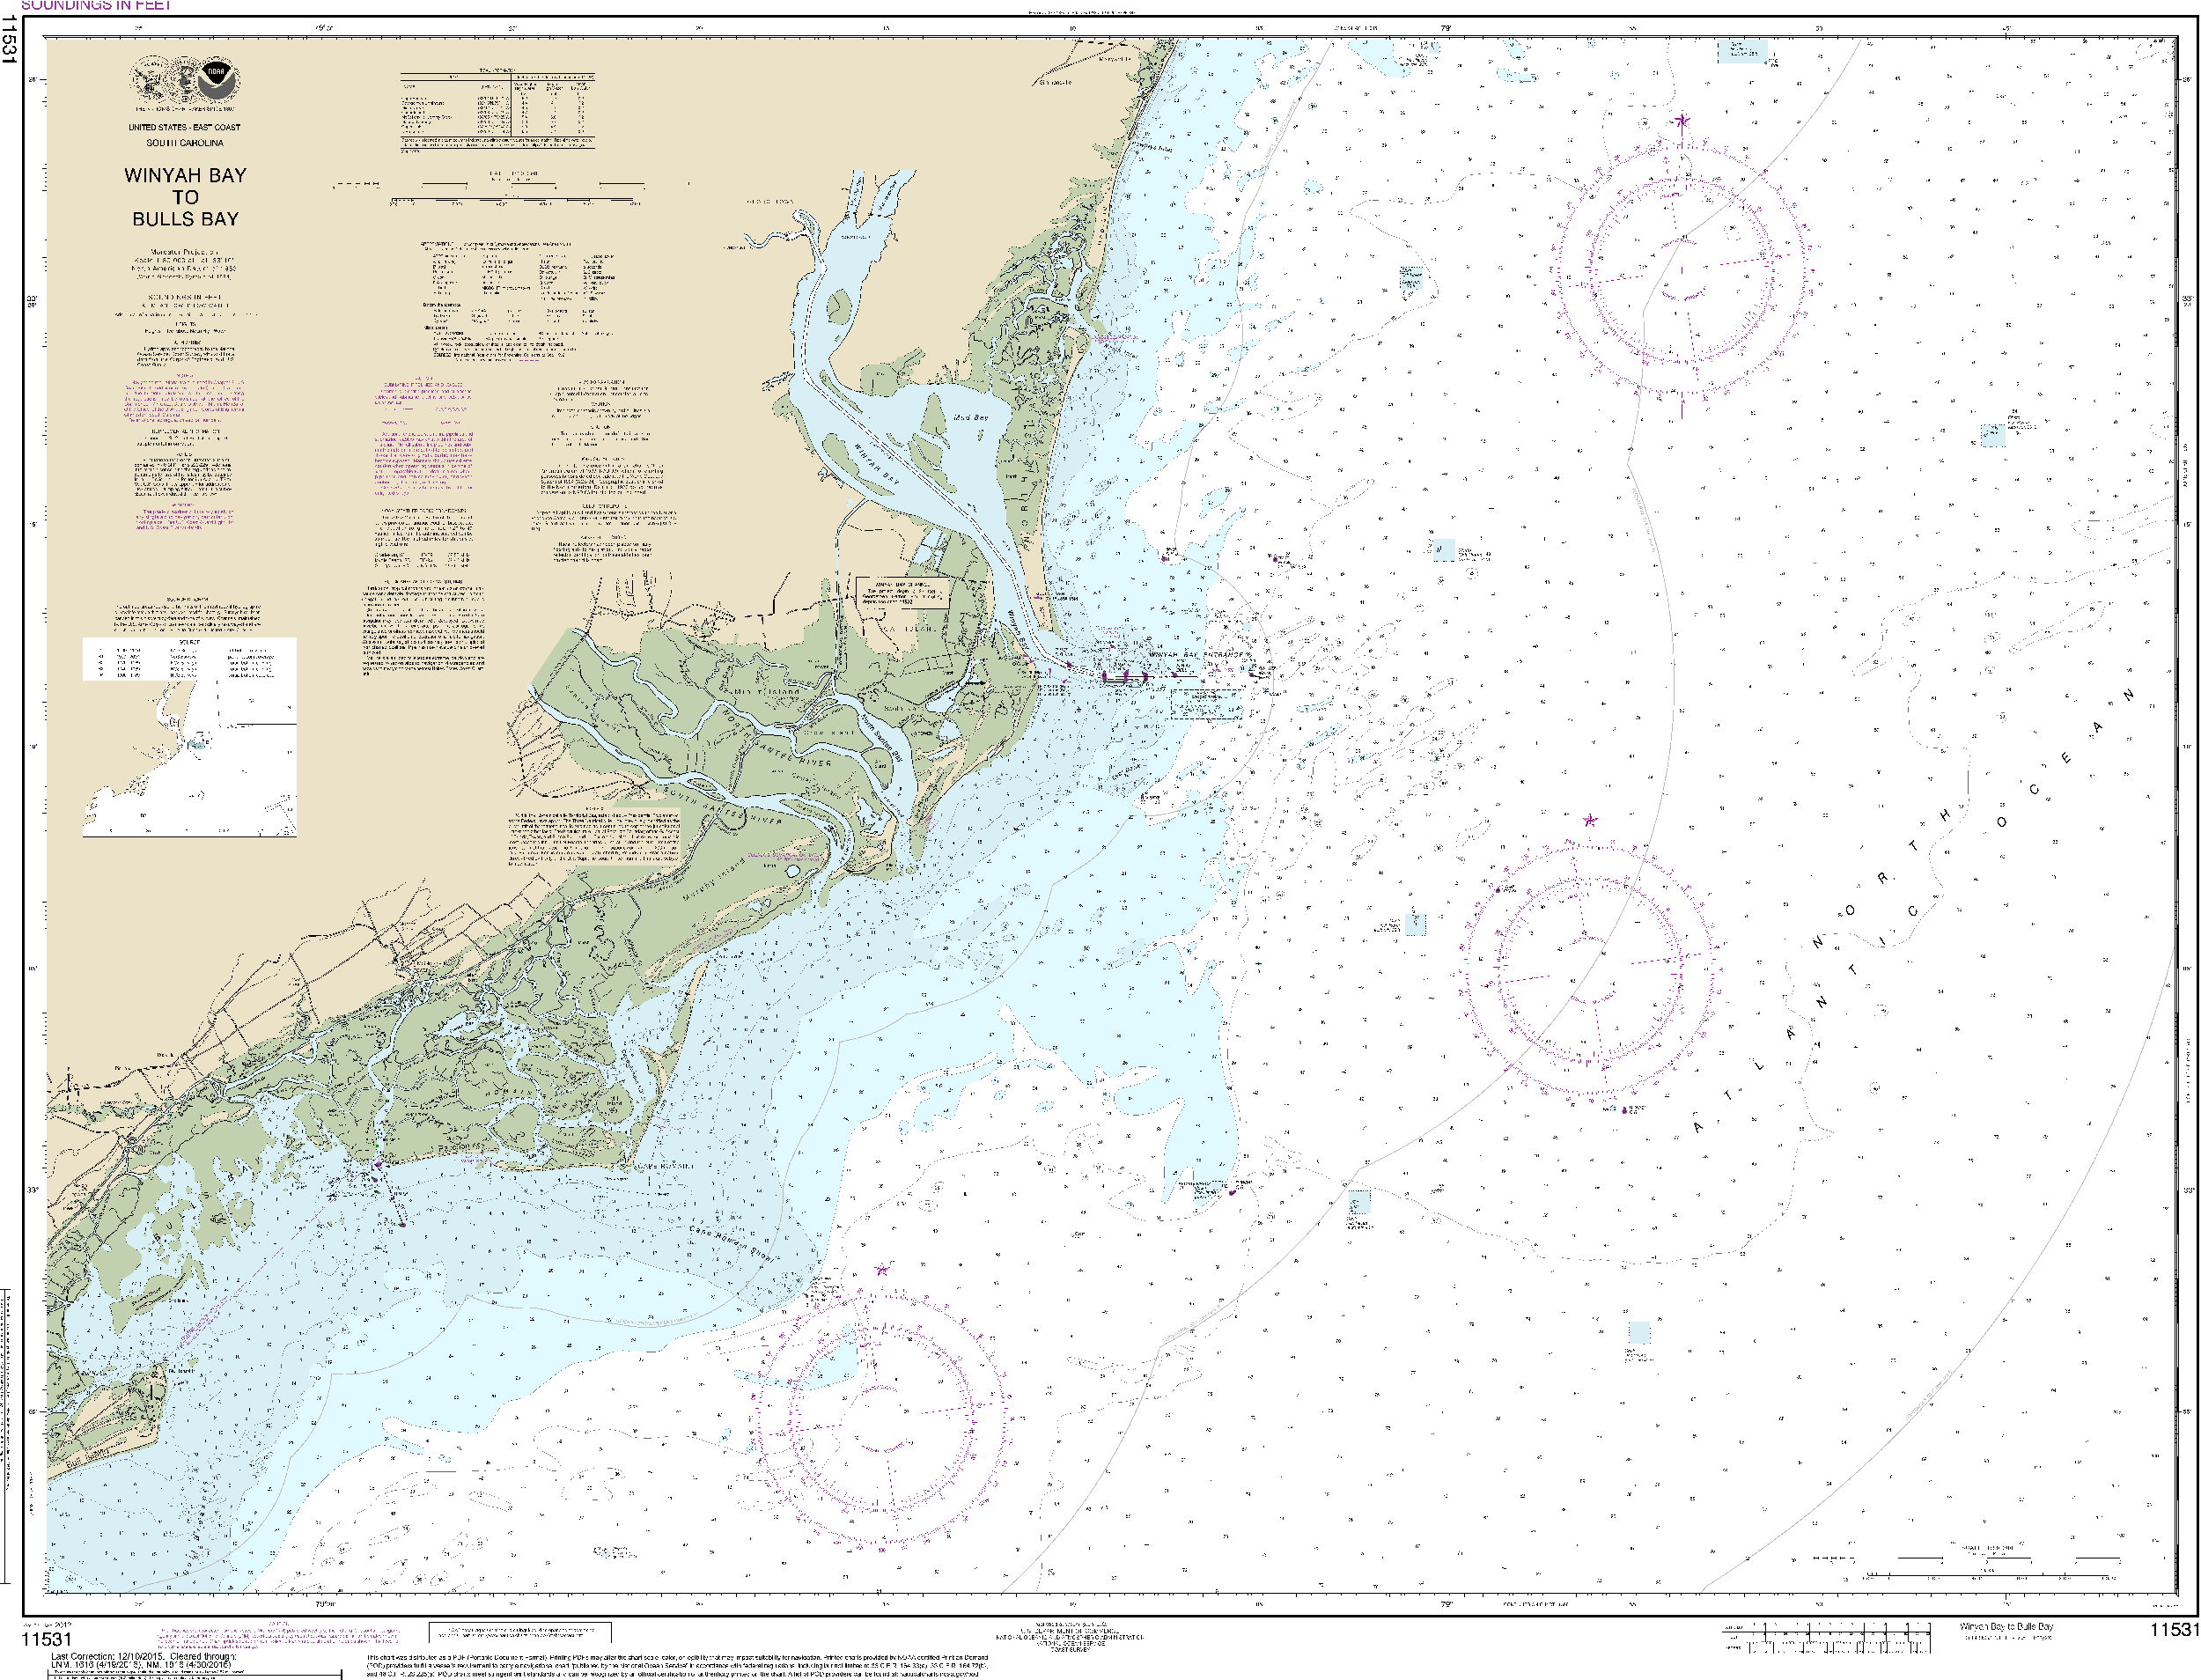 NOAA Nautical Chart 11531: Winyah Bay to Bulls Bay